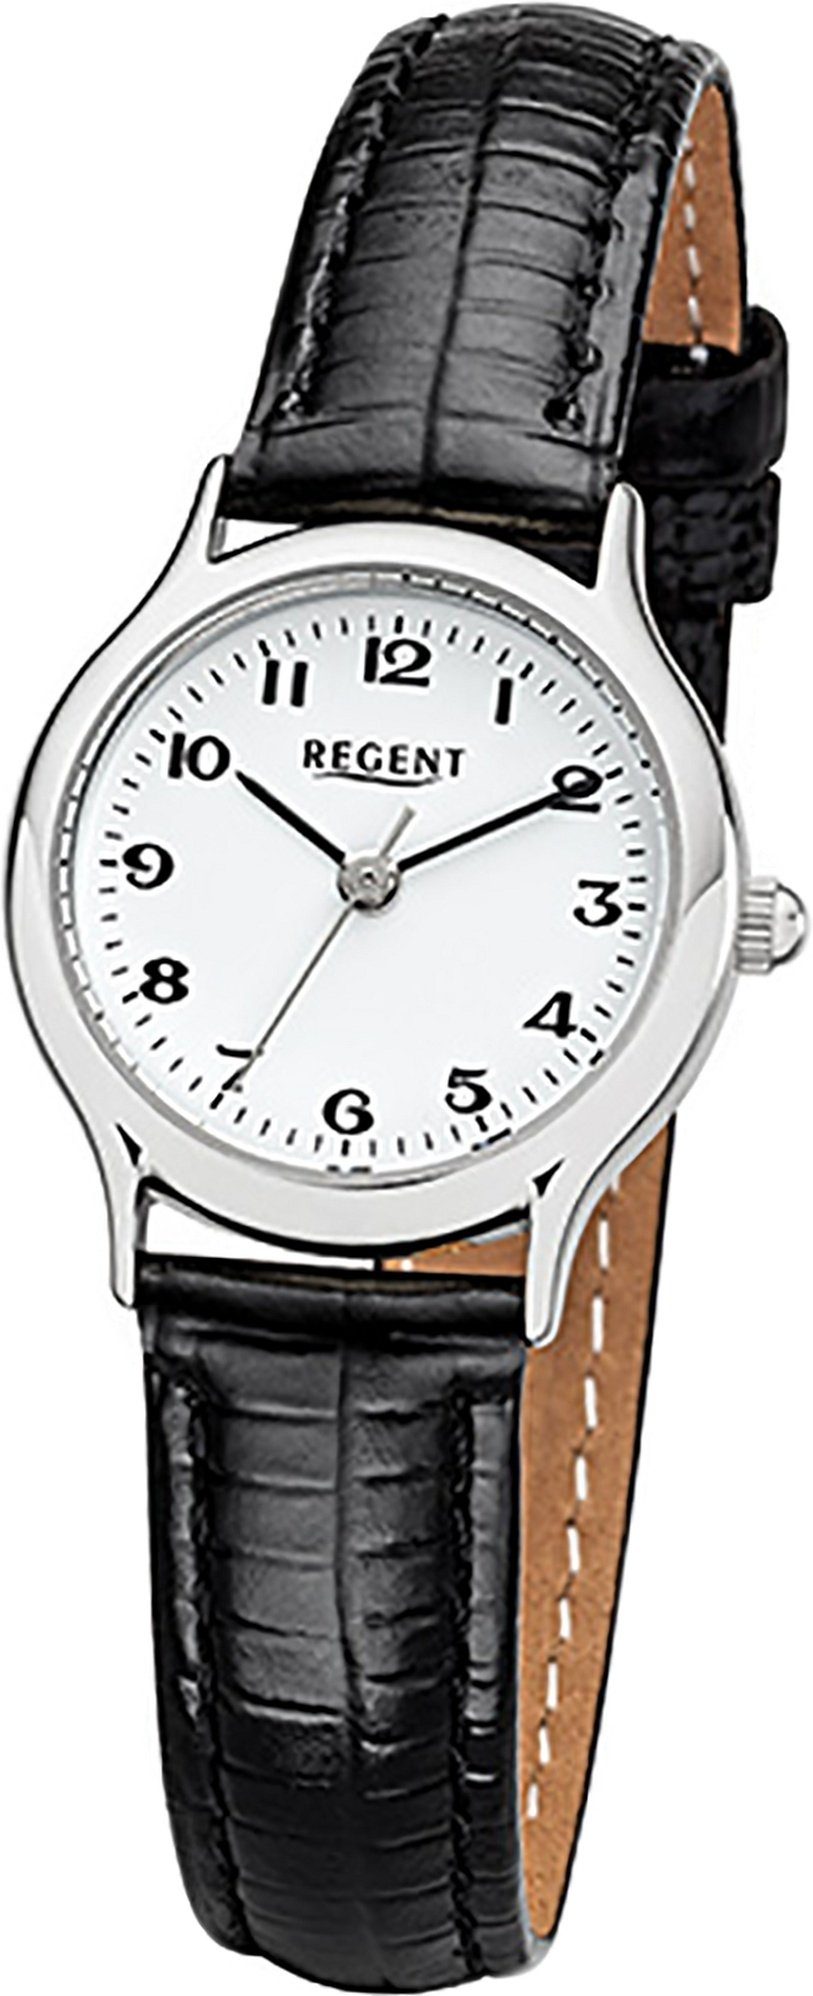 Regent Quarzuhr Regent Leder Damen Uhr F-972 Quarzuhr, Damenuhr mit Lederarmband, rundes Gehäuse, klein (ca. 24mm), Elegant-S